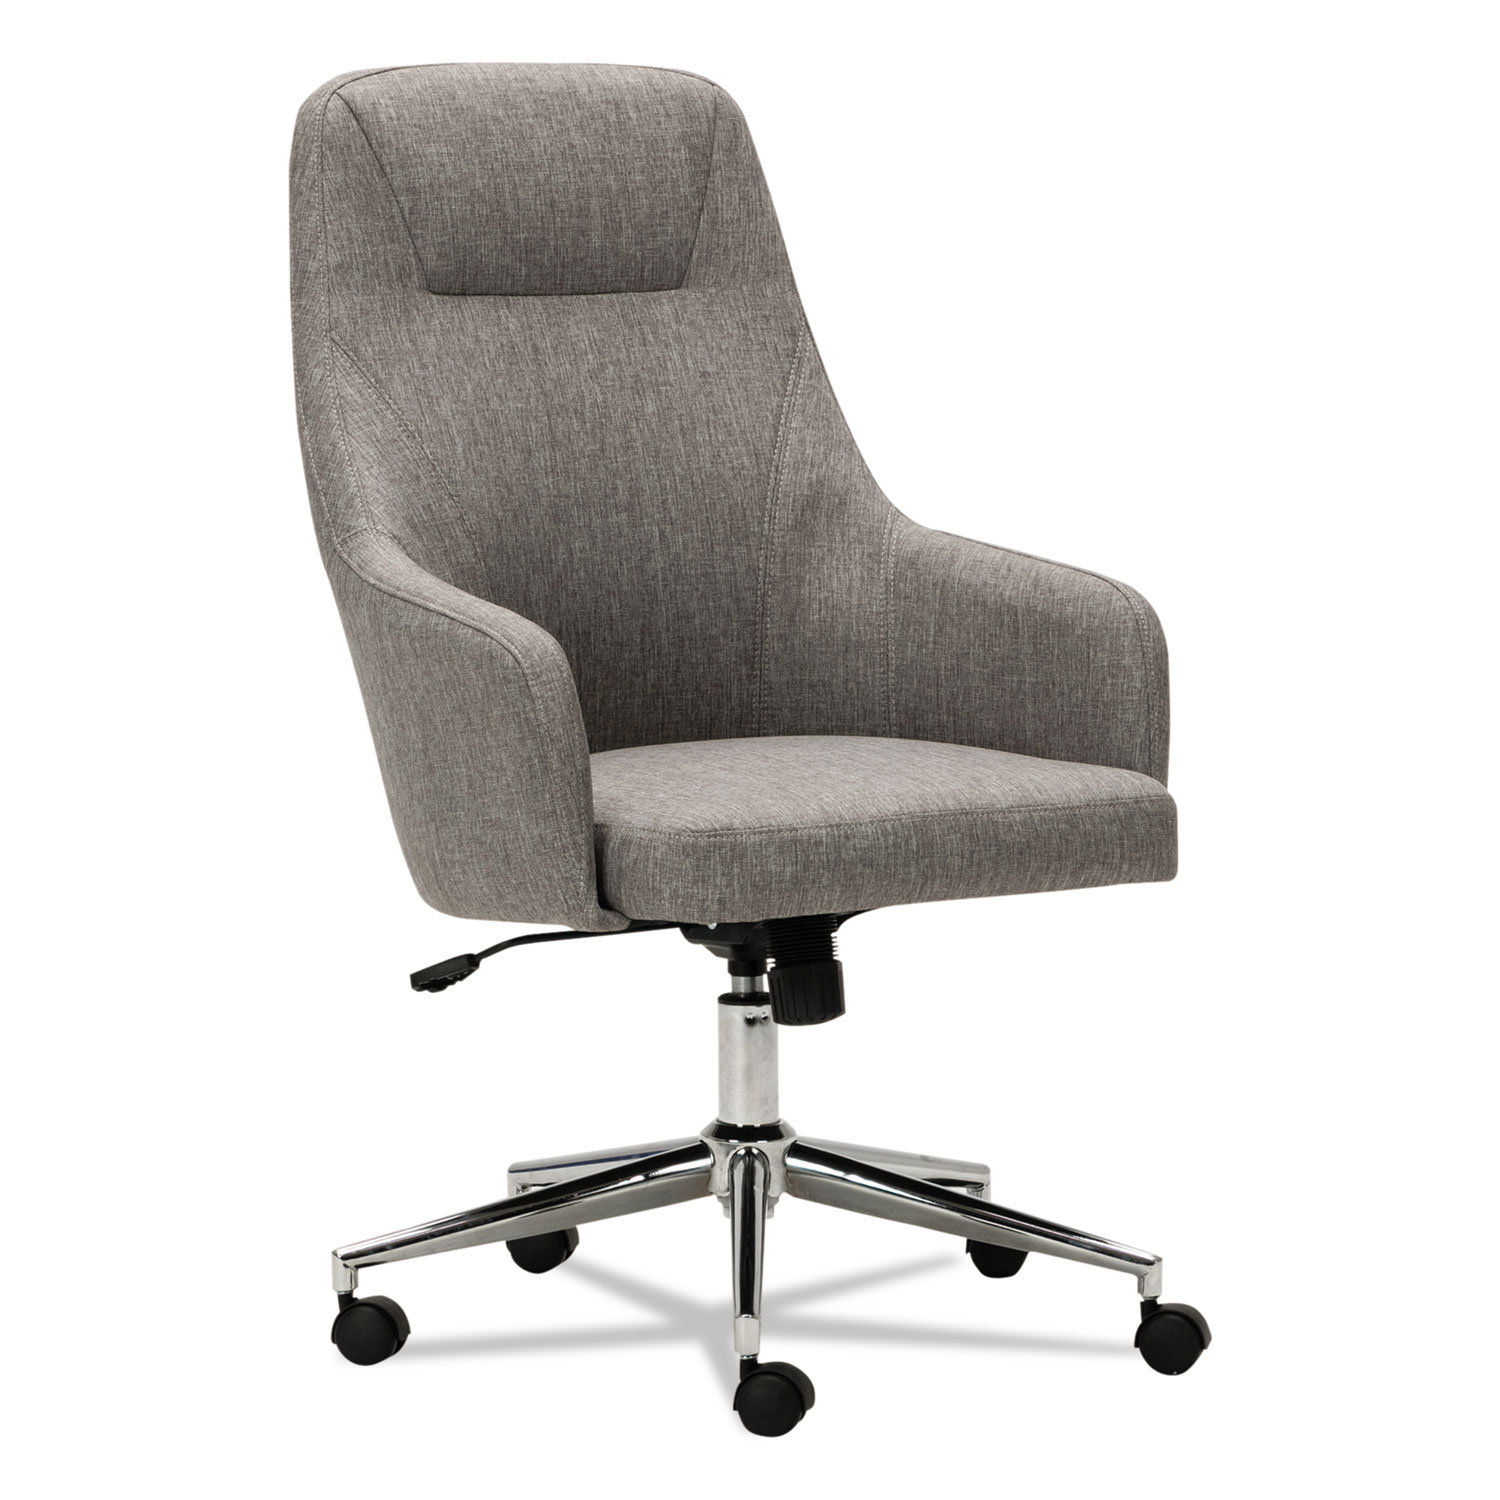  Alera ALECS4151 Alera Captain Series High-Back Chair, Supports up to 275 lbs., Gray Tweed Seat/Gray Tweed Back, Chrome Base (ALECS4151) 